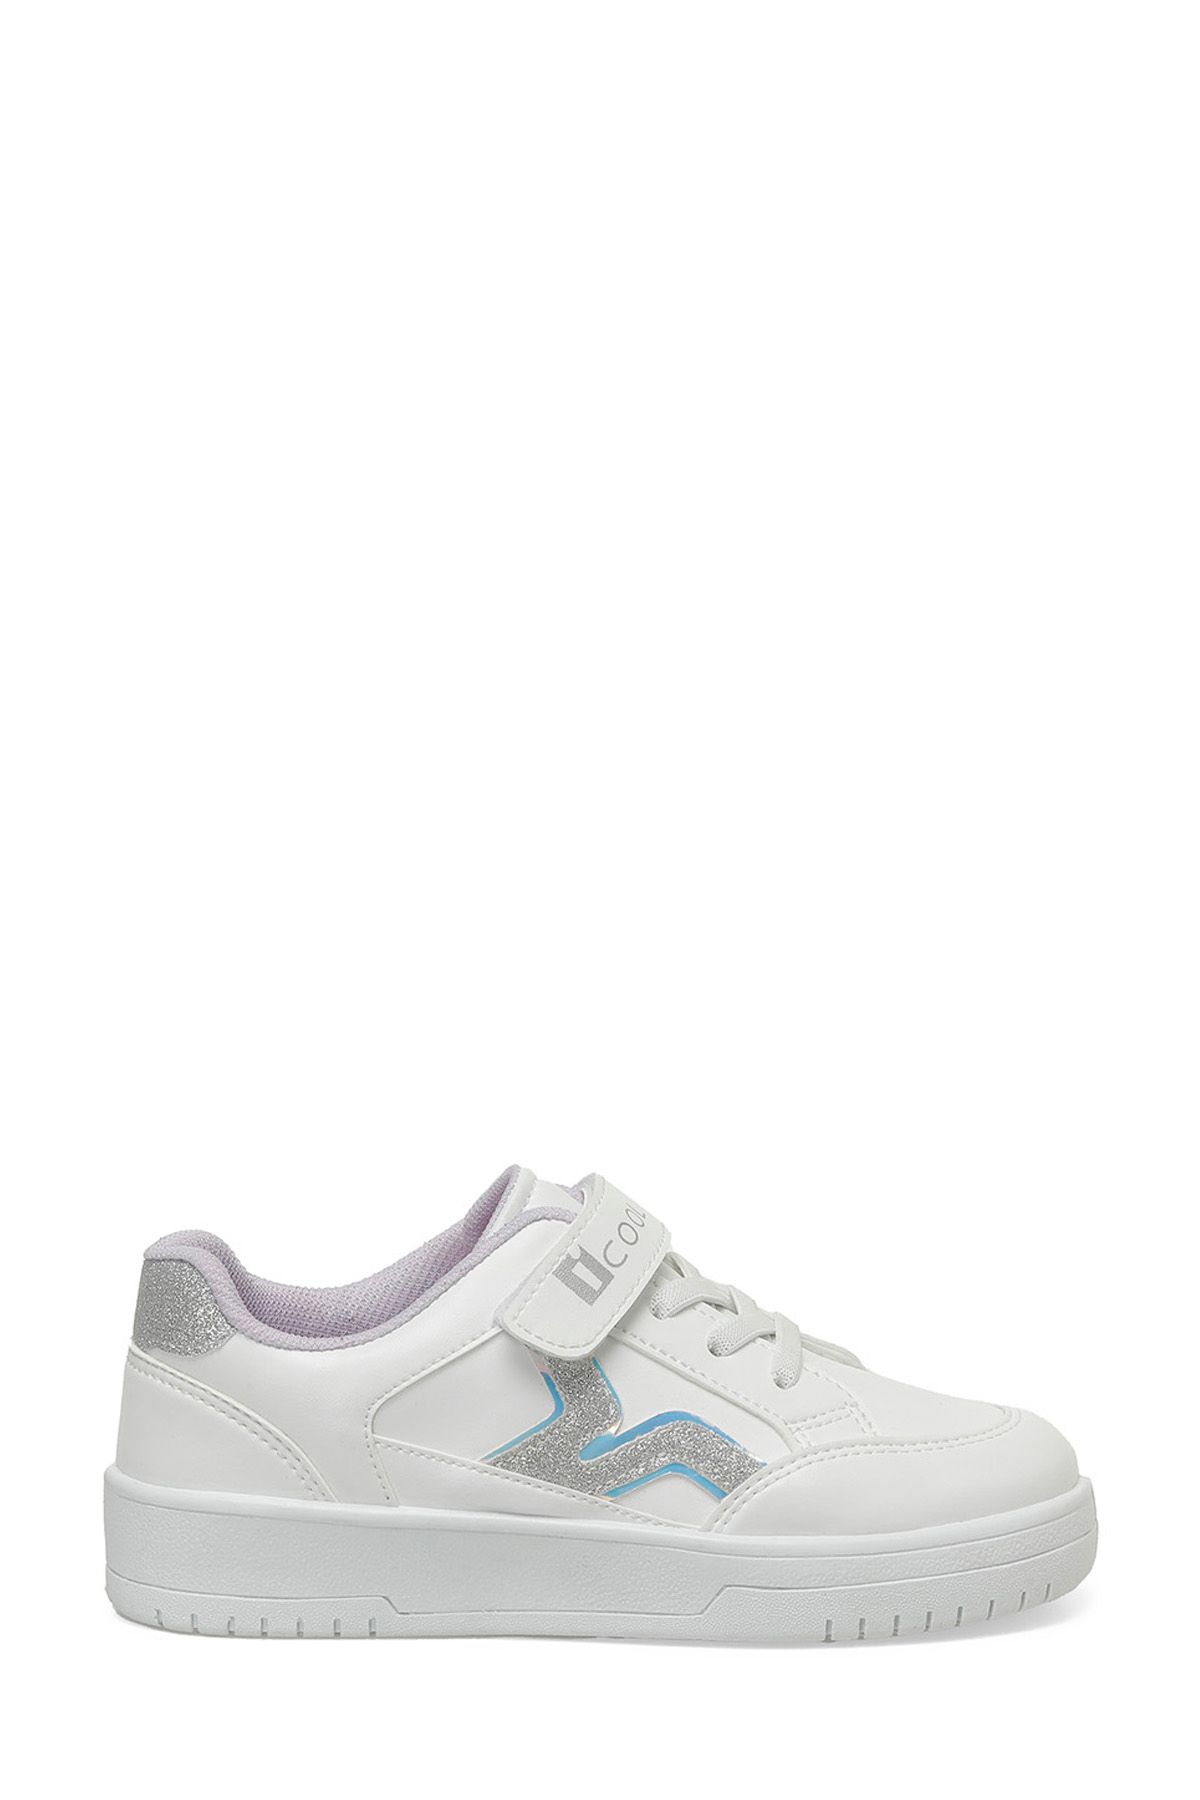 Icool RADO 4FX Beyaz Kız Çocuk Sneaker